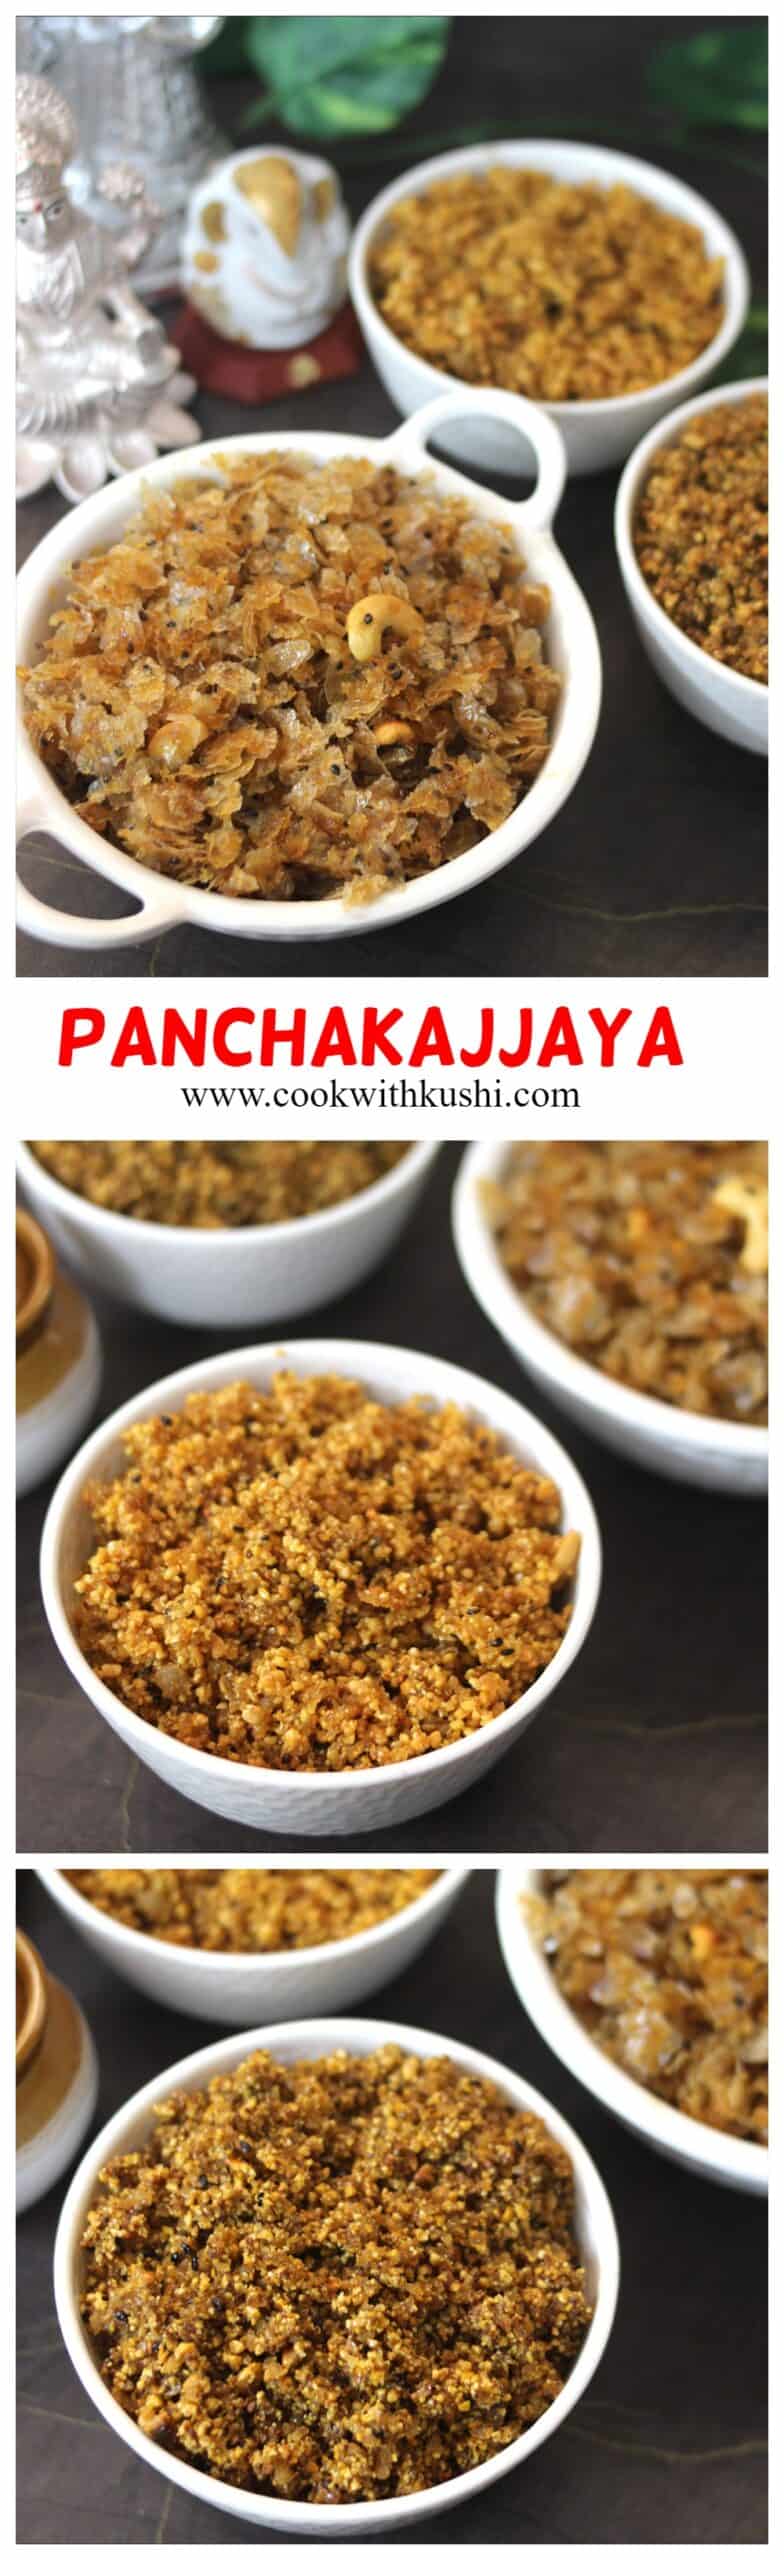 How to make Panchakajjaya, Panchkadayi for Ganesh Chaturthi, Navratri Pooja